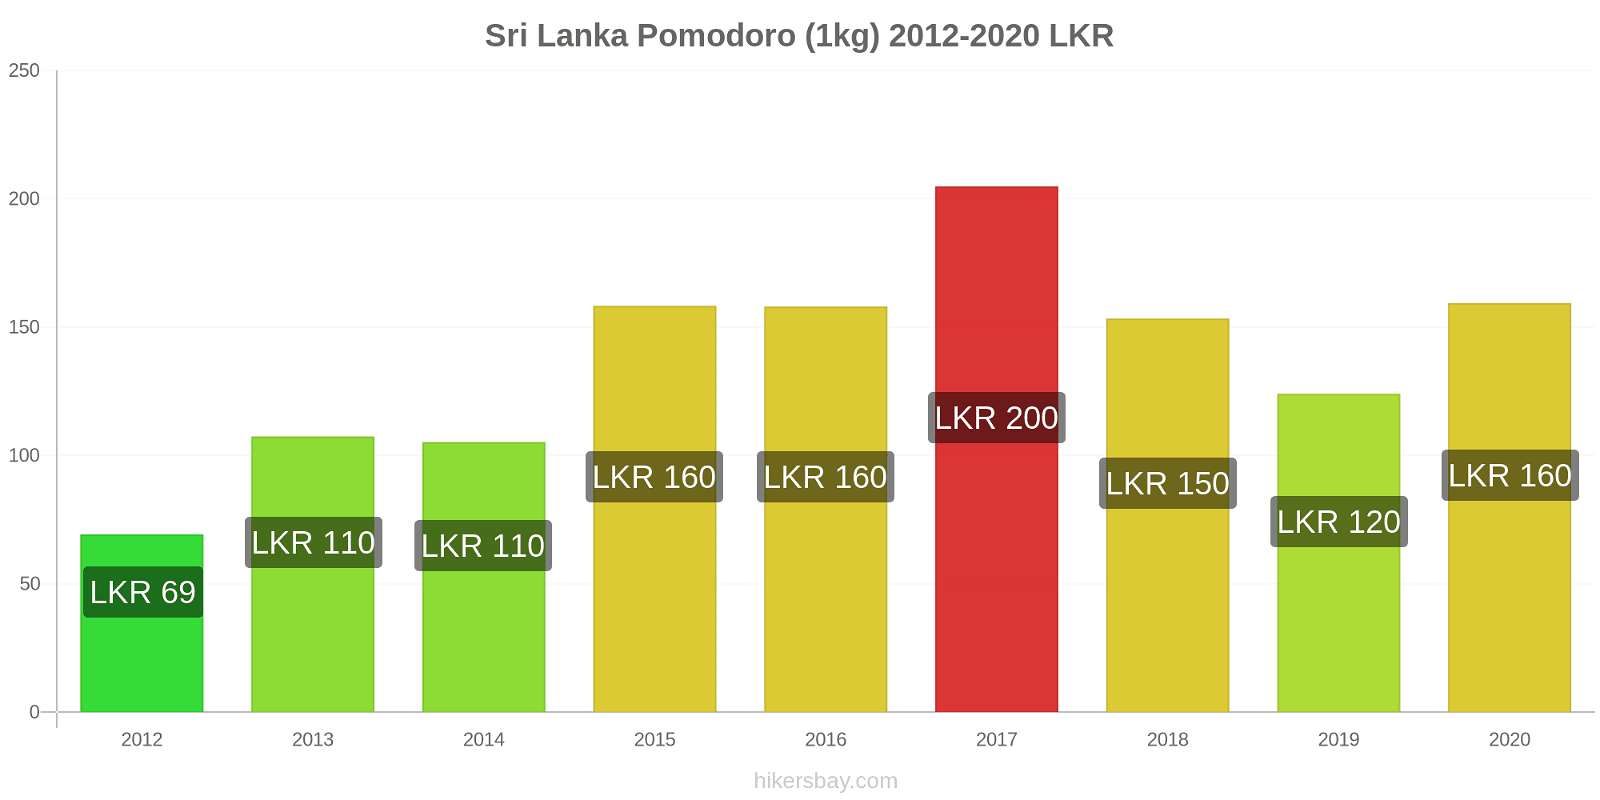 Sri Lanka variazioni di prezzo Pomodoro (1kg) hikersbay.com